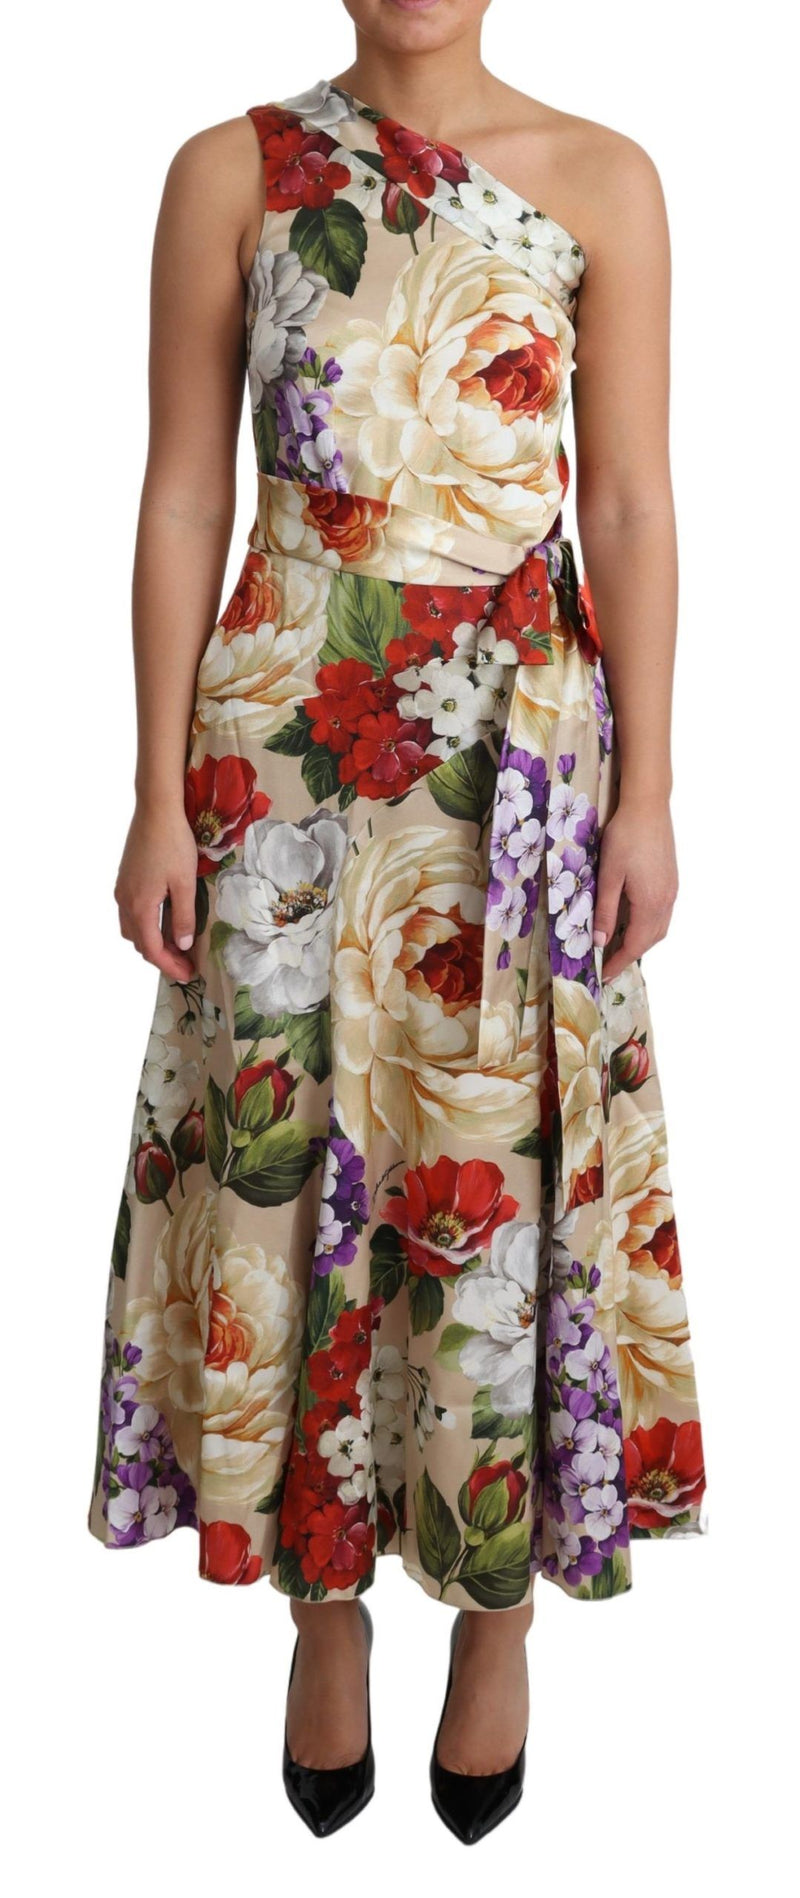 Dolce & Gabbana Print Silk Stretch One Shoulder Dress Women's Floral